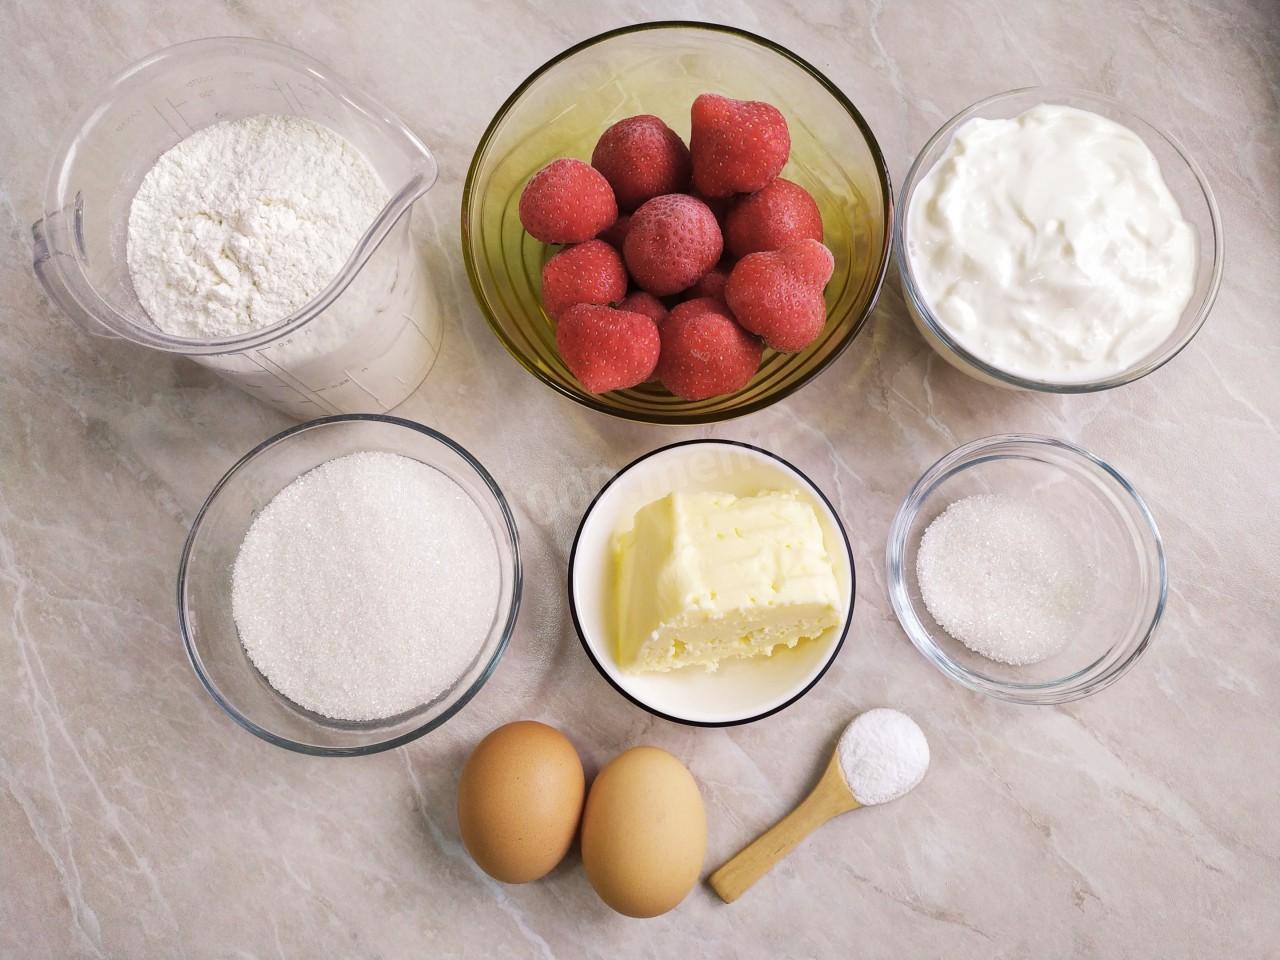 Сметана яйца мука сахар сливочное масло. Картинка молоко яйцо мука сахар. Что приготовить из молока, яиц, сахара, разрыхлителя и муки. Что можно приготовить дома из муки молока и яиц.